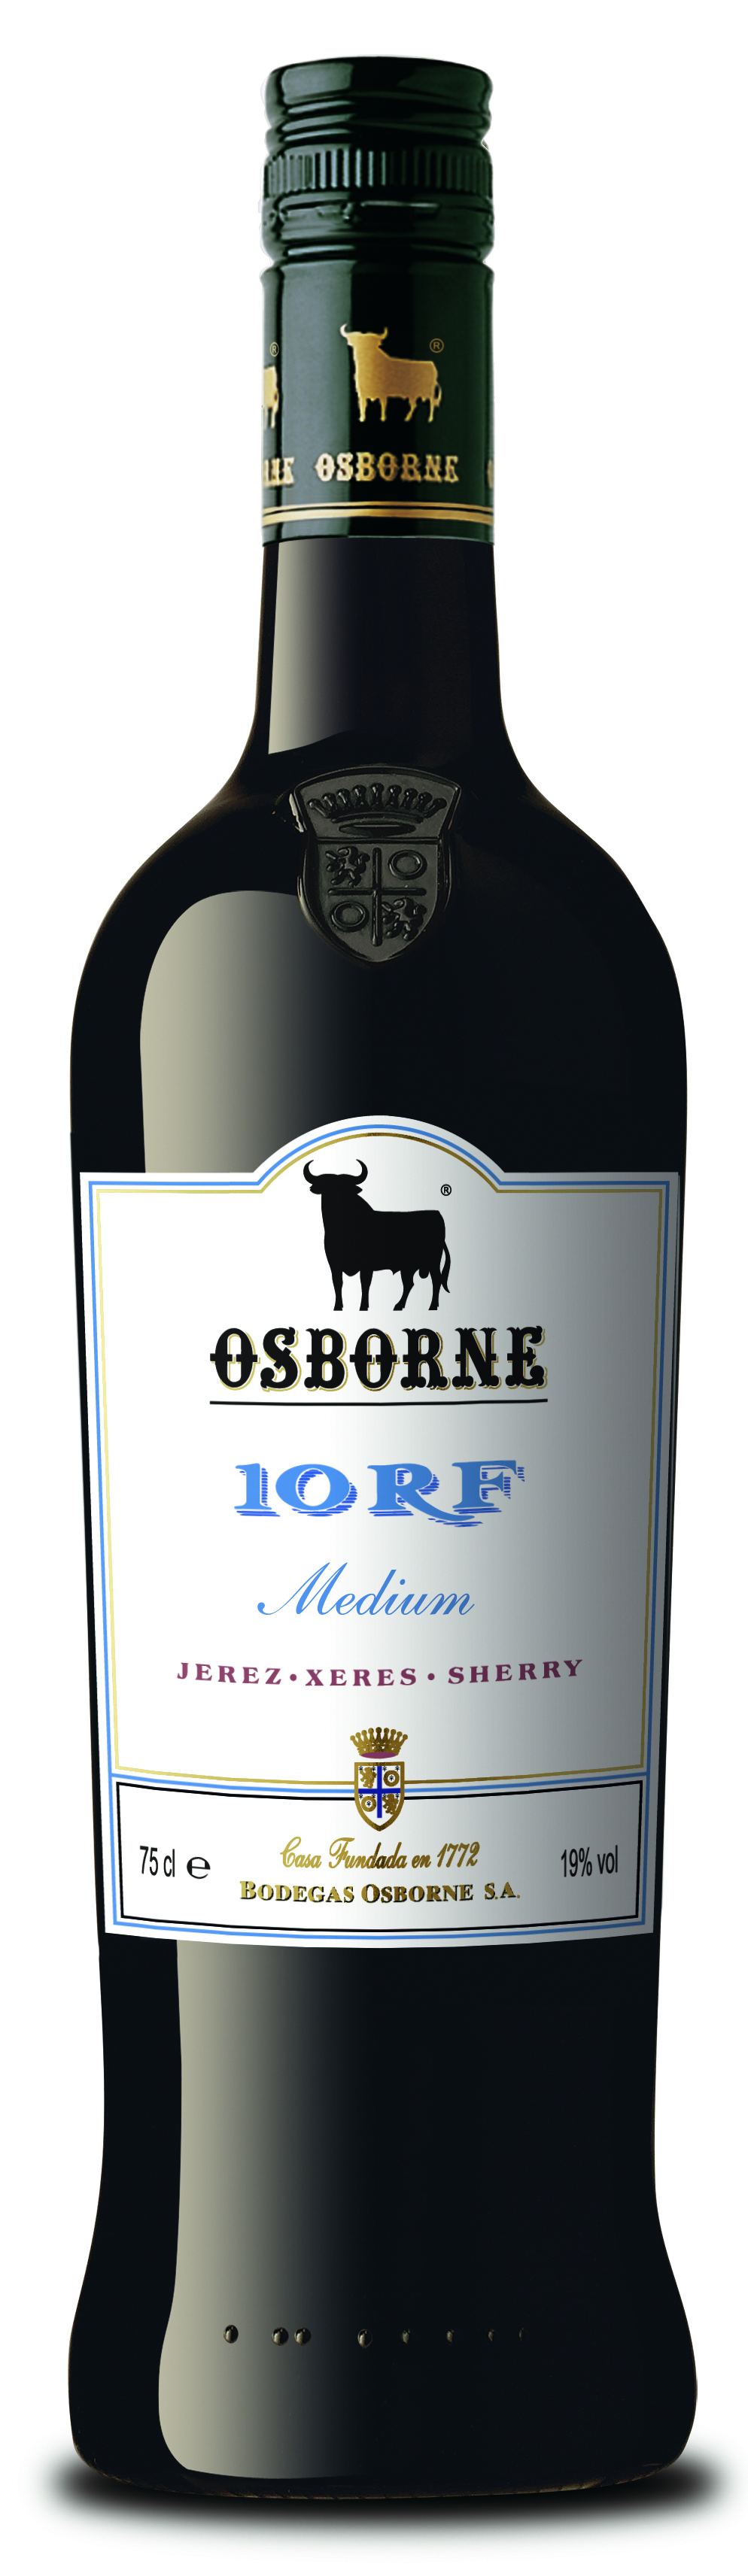 Osborne Sherry 10 RF Medium - 0,75L 19% vol